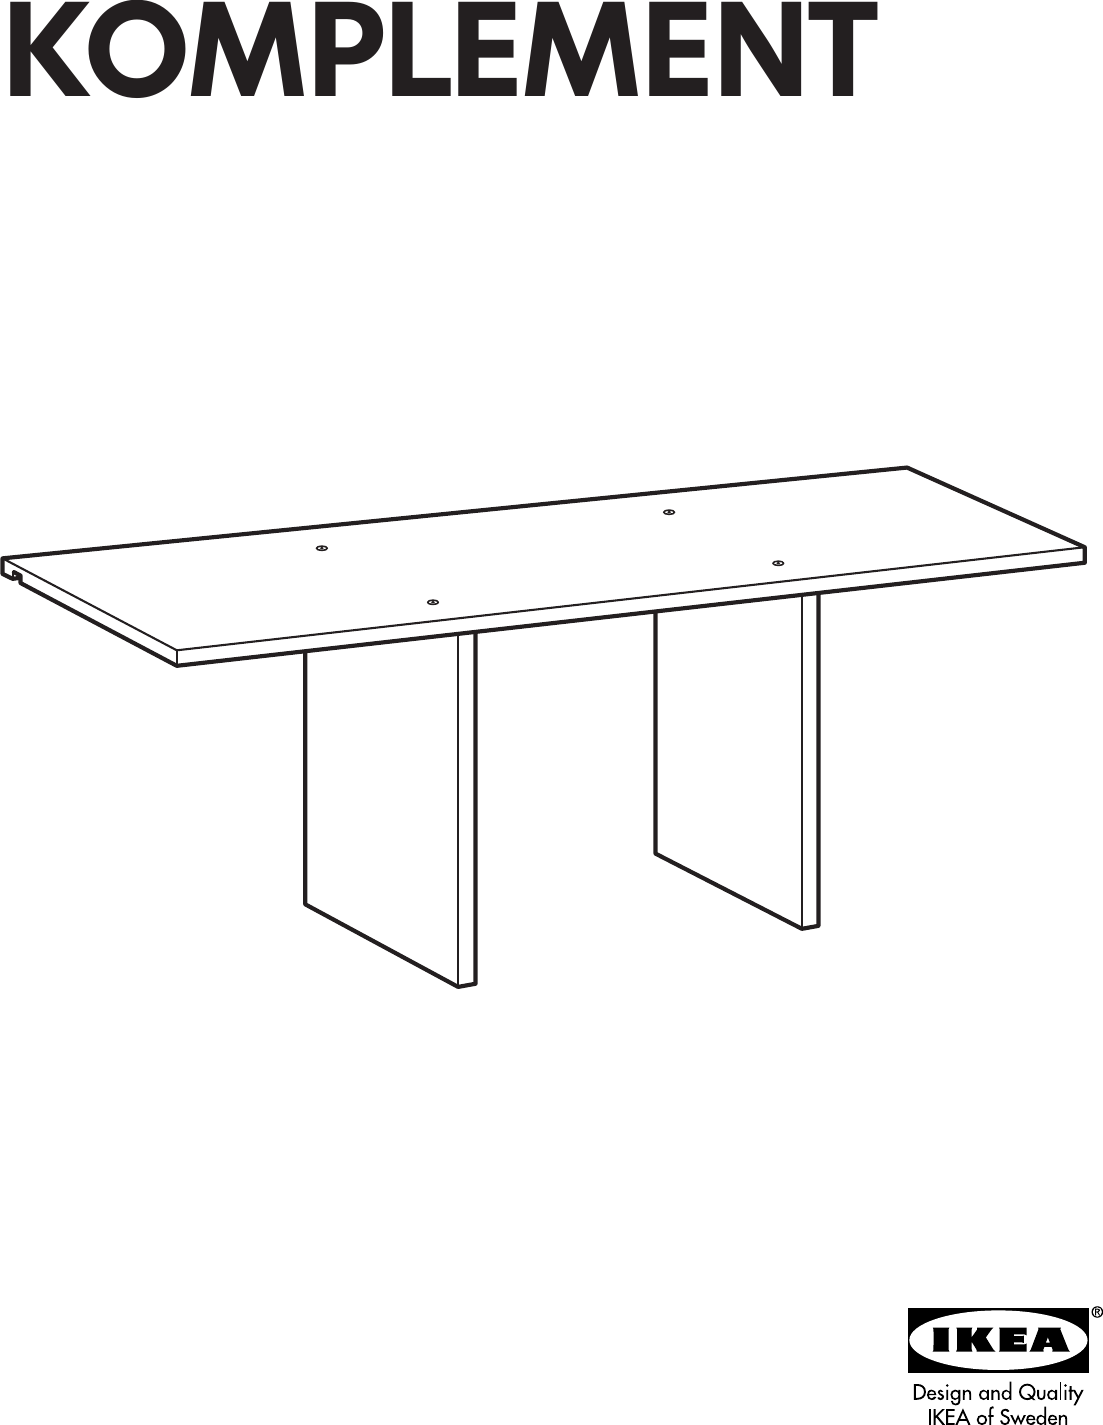 Page 1 of 8 - Ikea Ikea-Komplement-Shelf-Insert-Assembly-Instruction